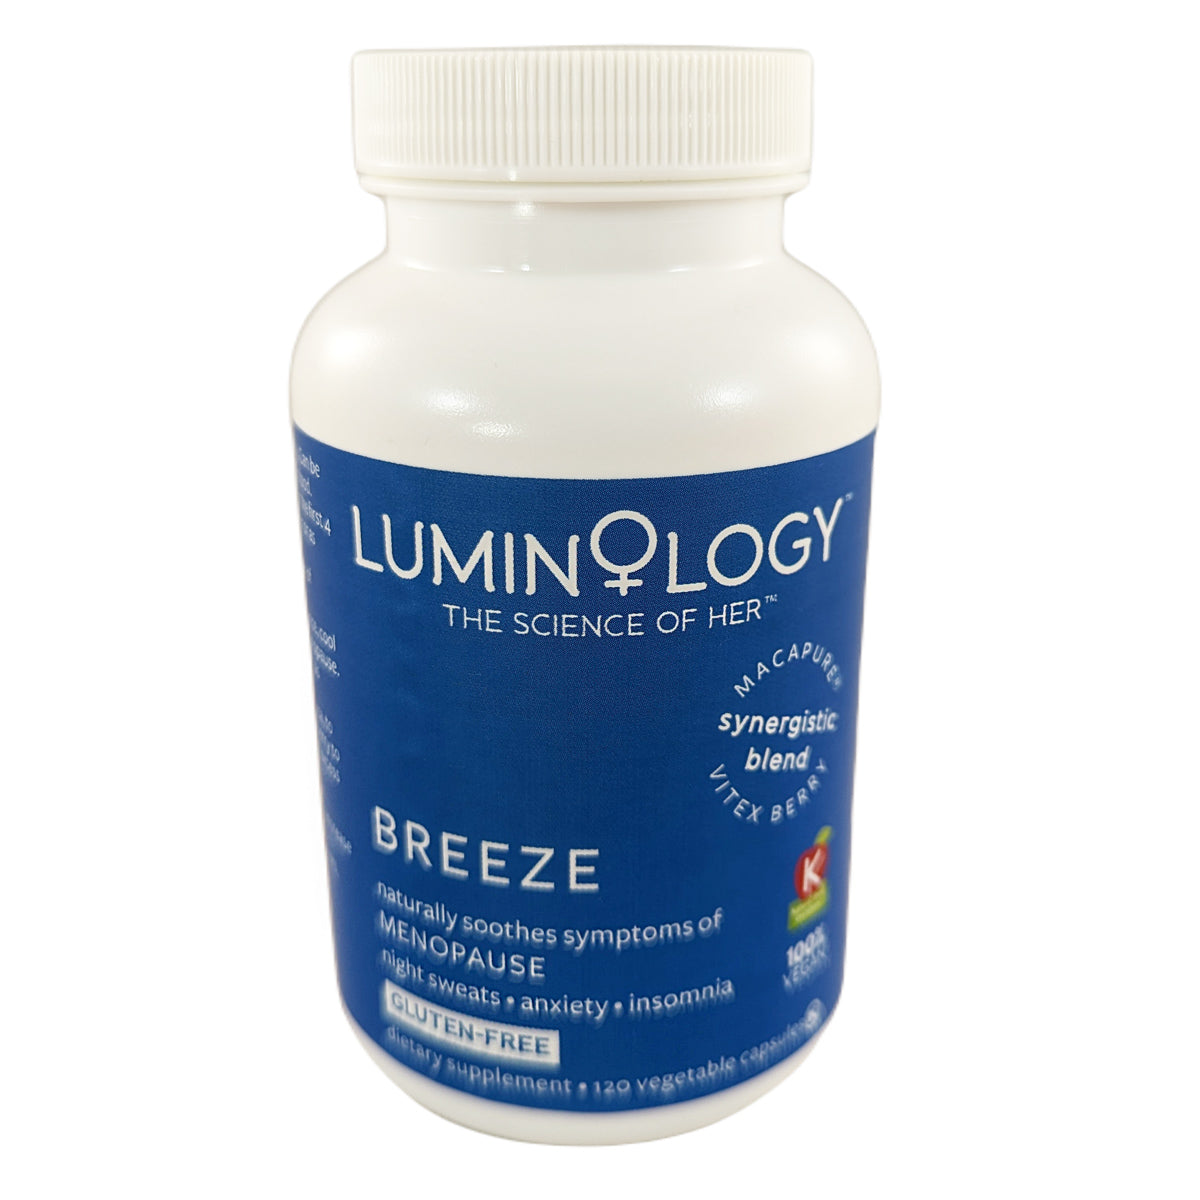    Luminology Breeze Menopause Supplements